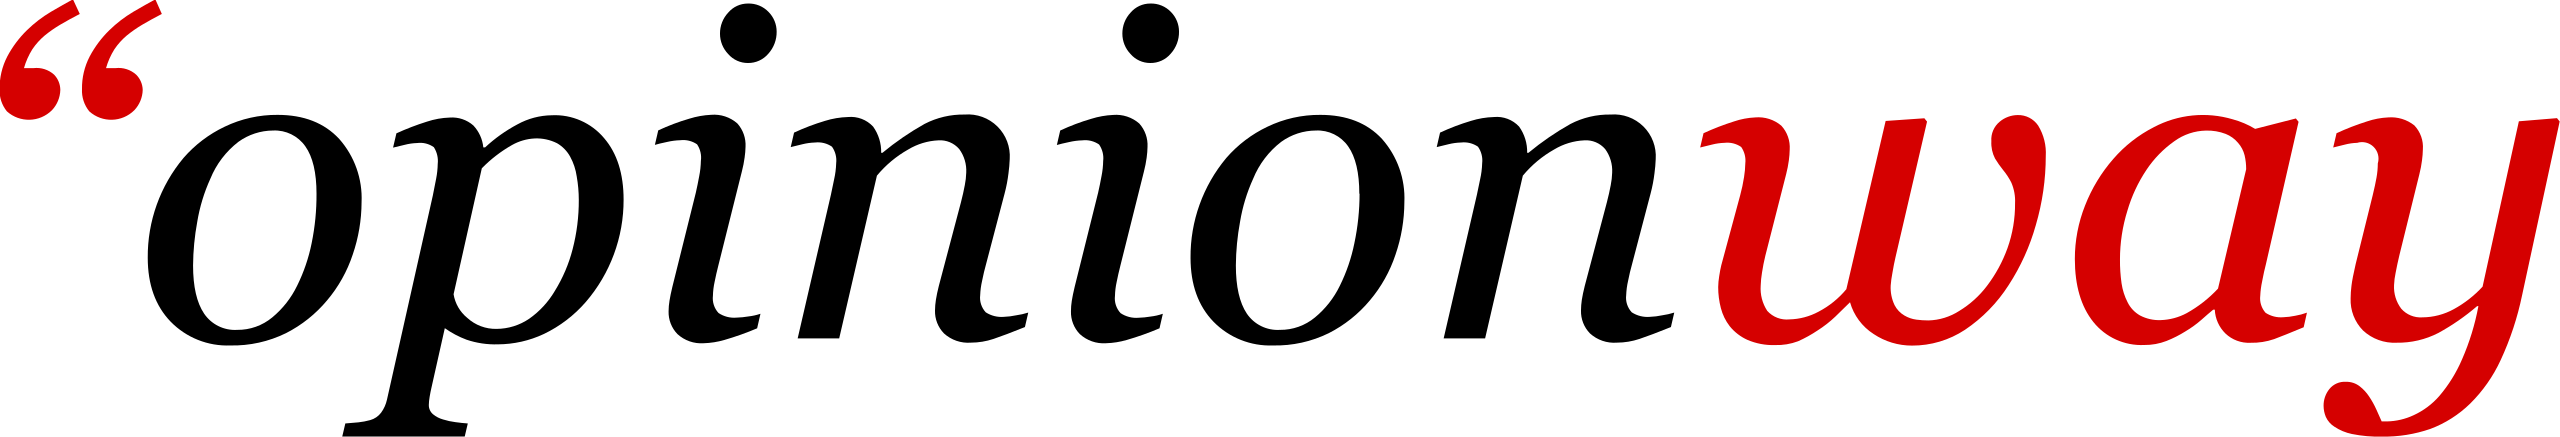 Fichier:Opinionway logo.svg — Wikipédia